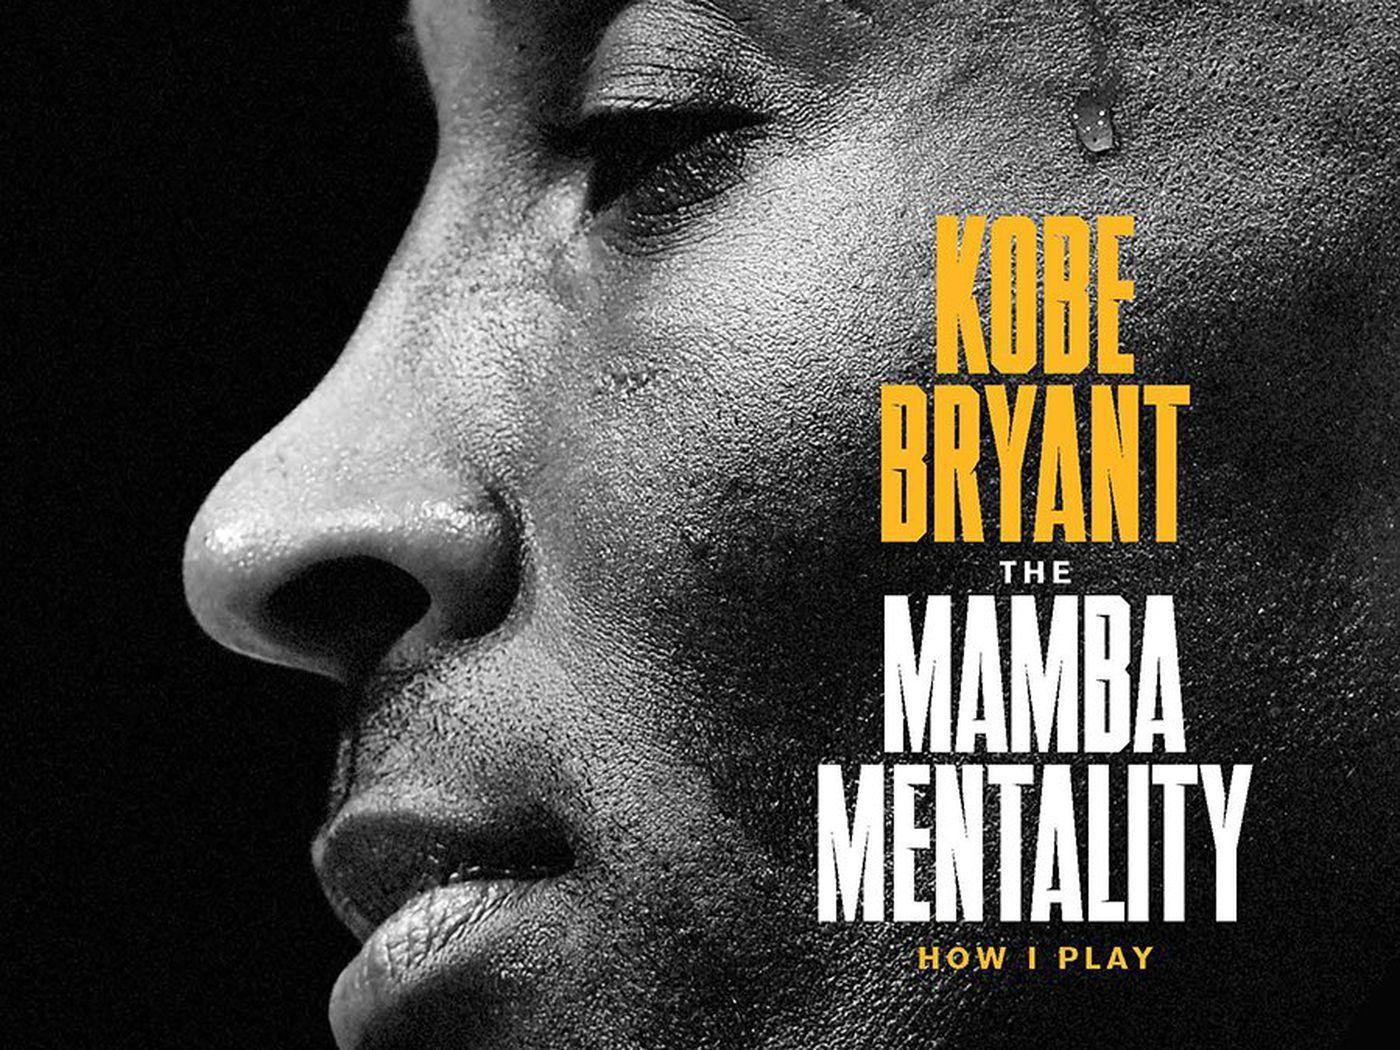 Lakers News: Kobe Bryant announced he's writing a book